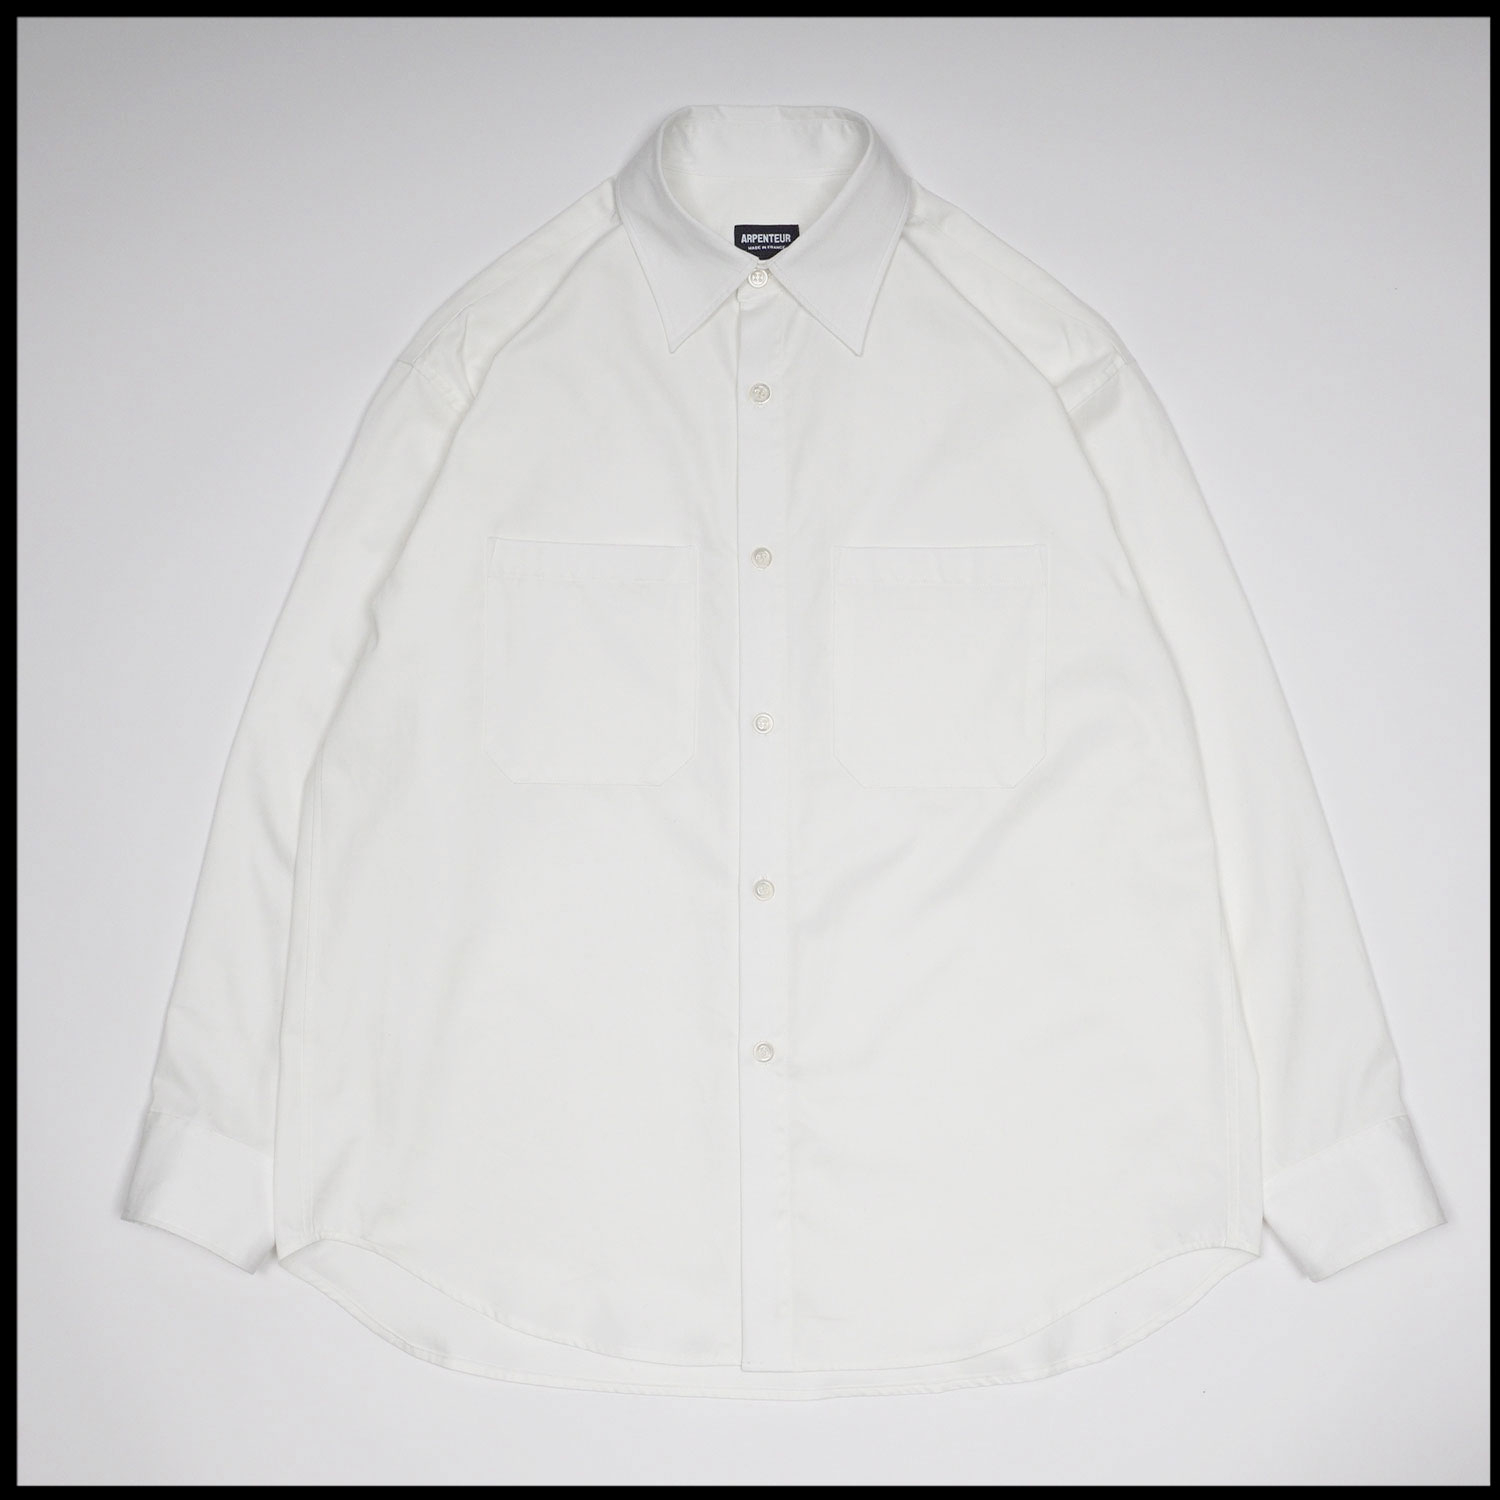 DORIS shirt in White color by Arpenteur